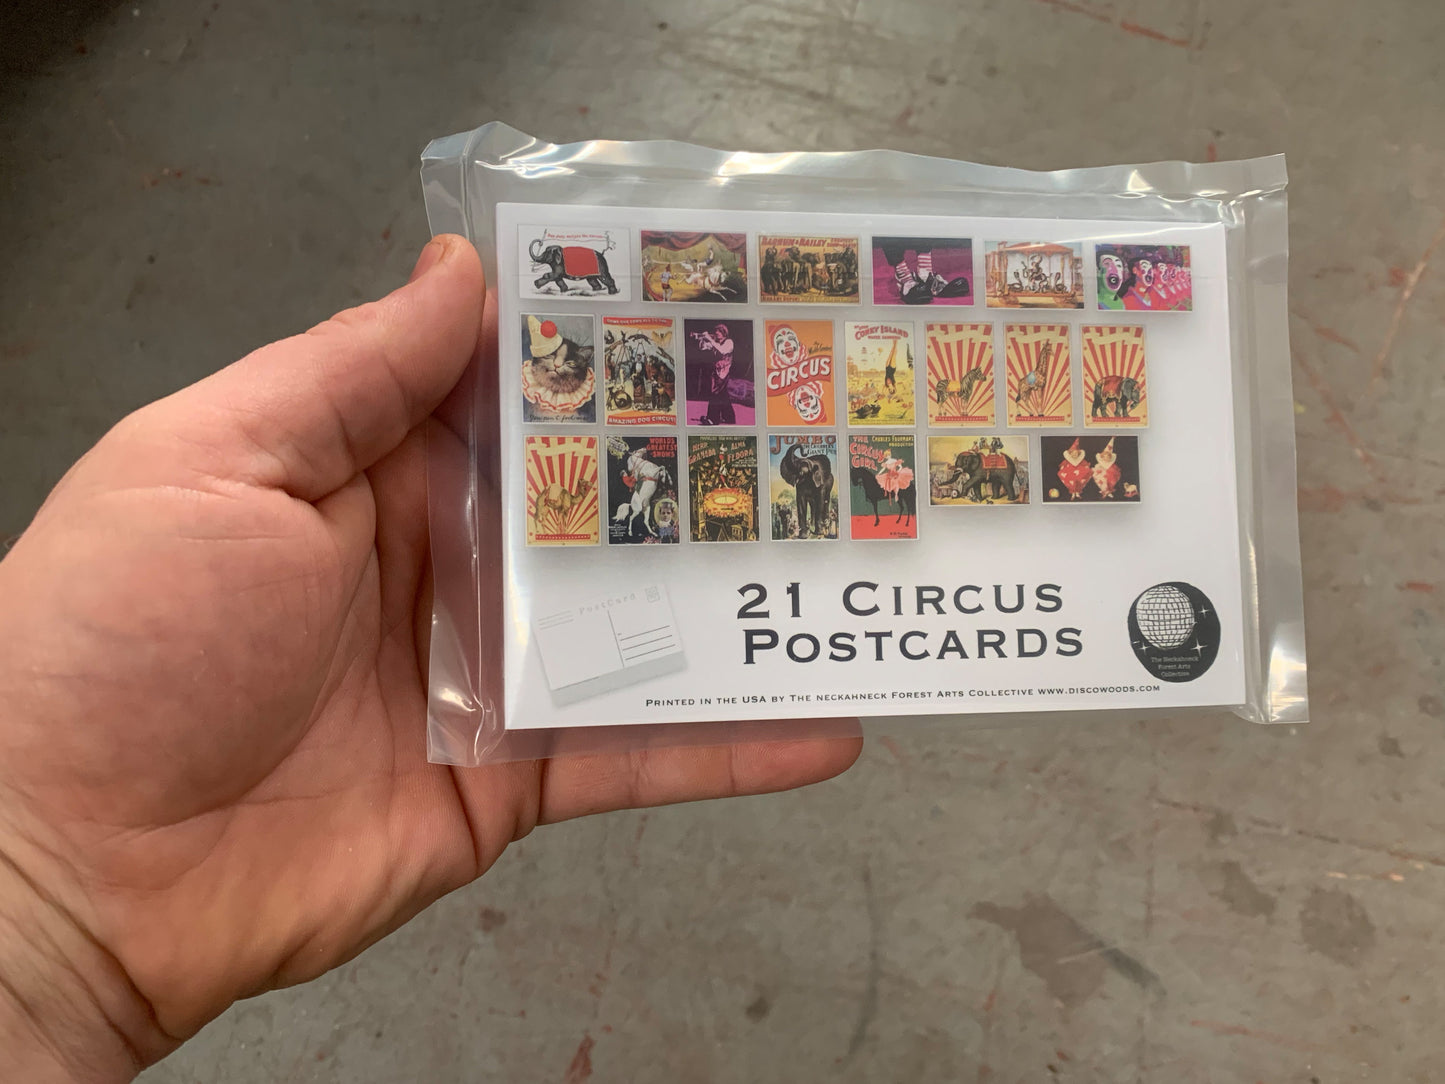 Circus Postcard set - 21 postcards featuring circus poster art, animals and clowns - gift set - scrapbooking - collage kit